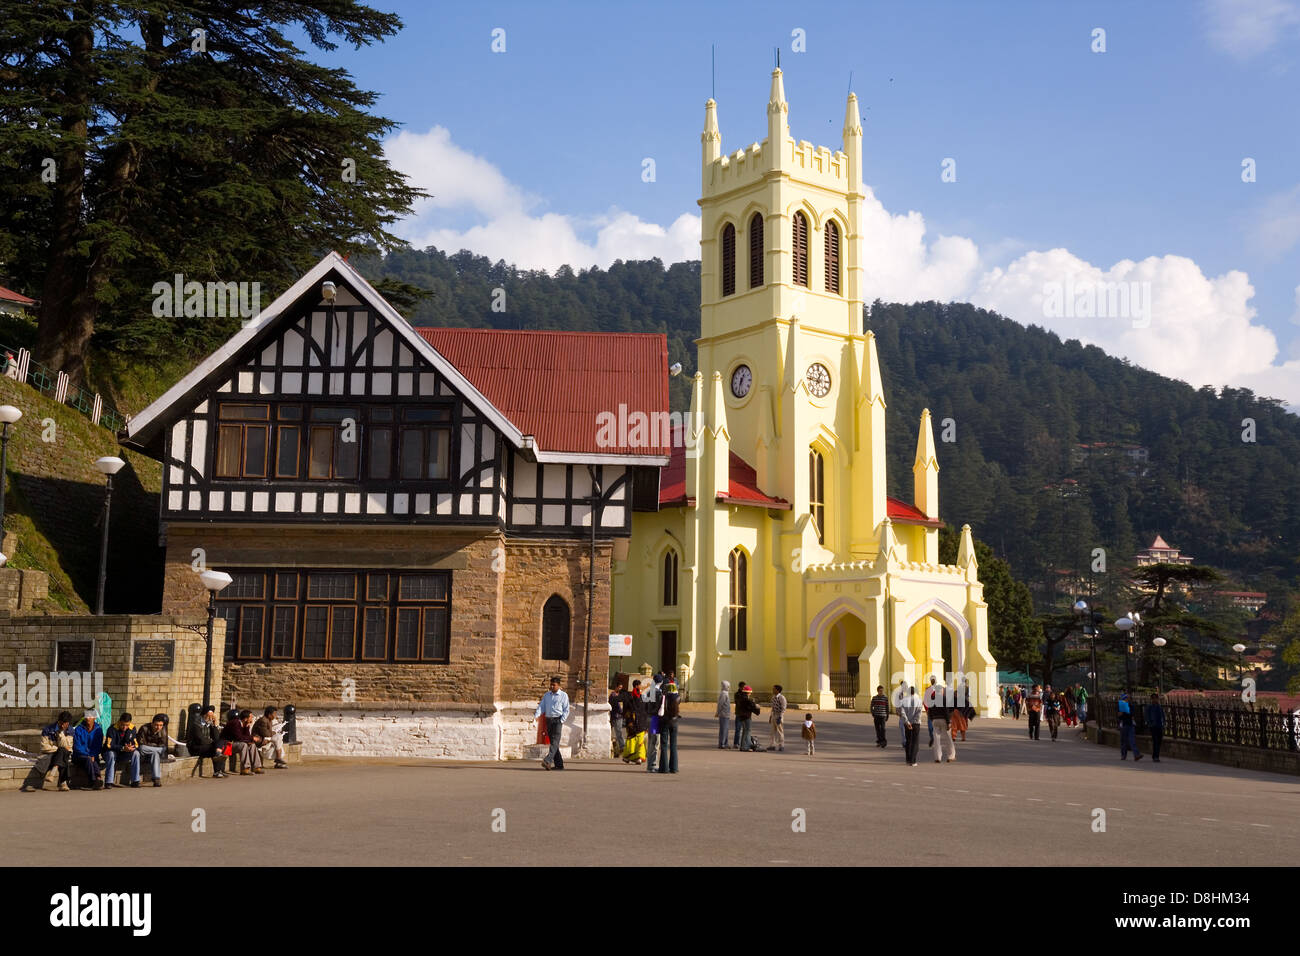 St Michael's Cathedral at Shimla, Shimla Hill Station, The Mall, Himachal Pradesh, India Stock Photo